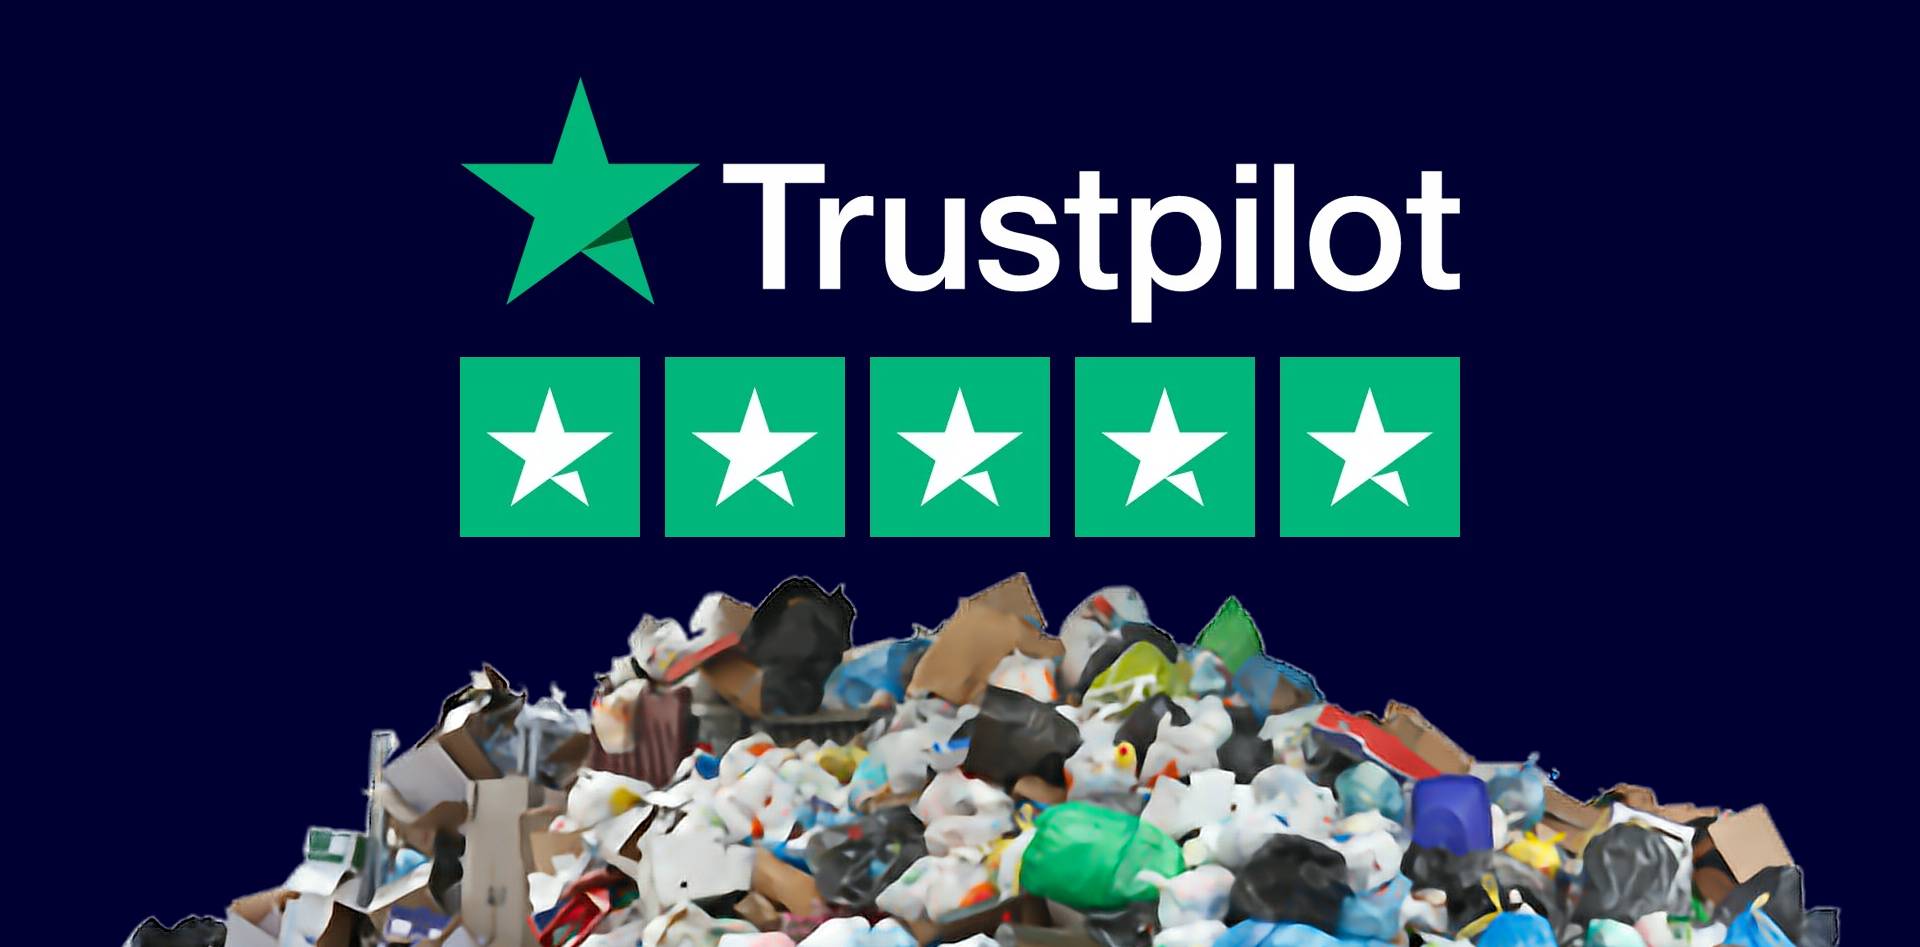 Logo de trustpilot encima de un montón de basura